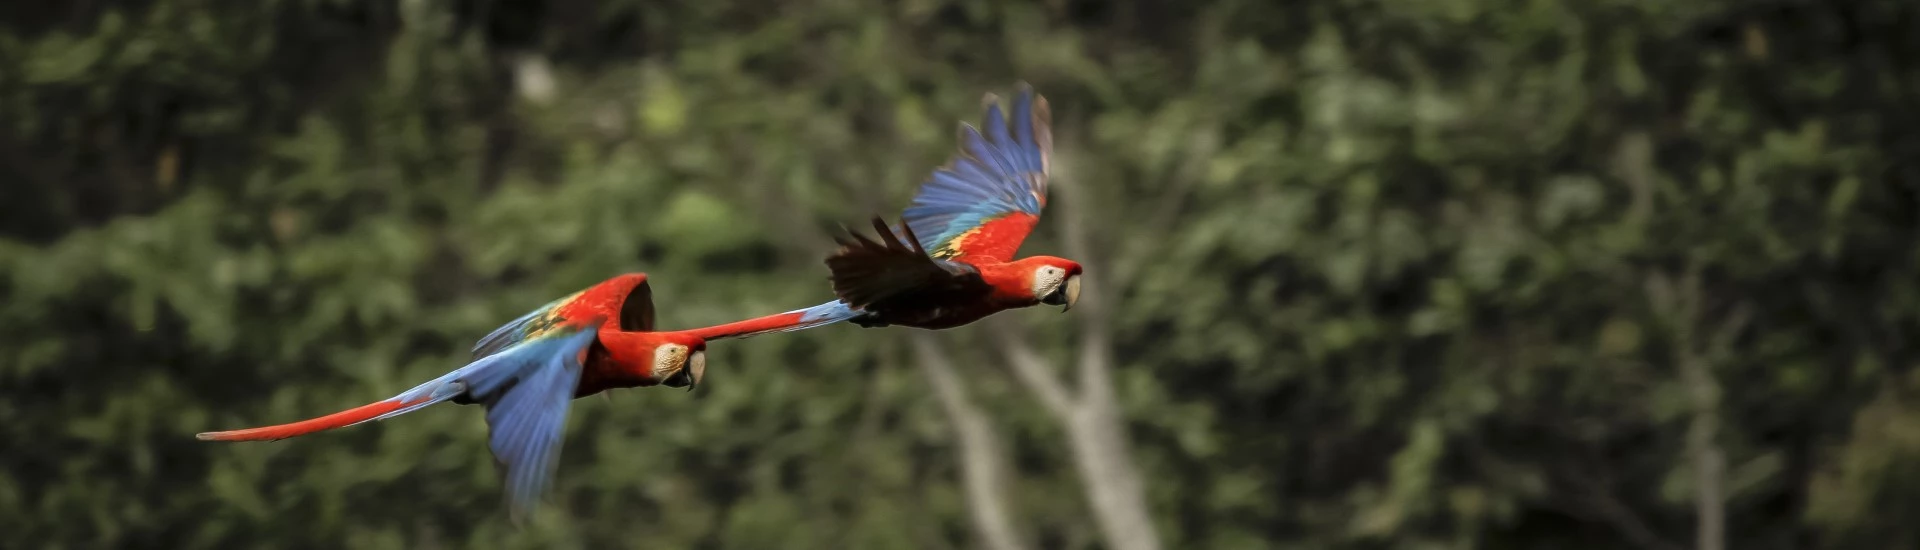 Peruvian Amazon - Two macaws flying